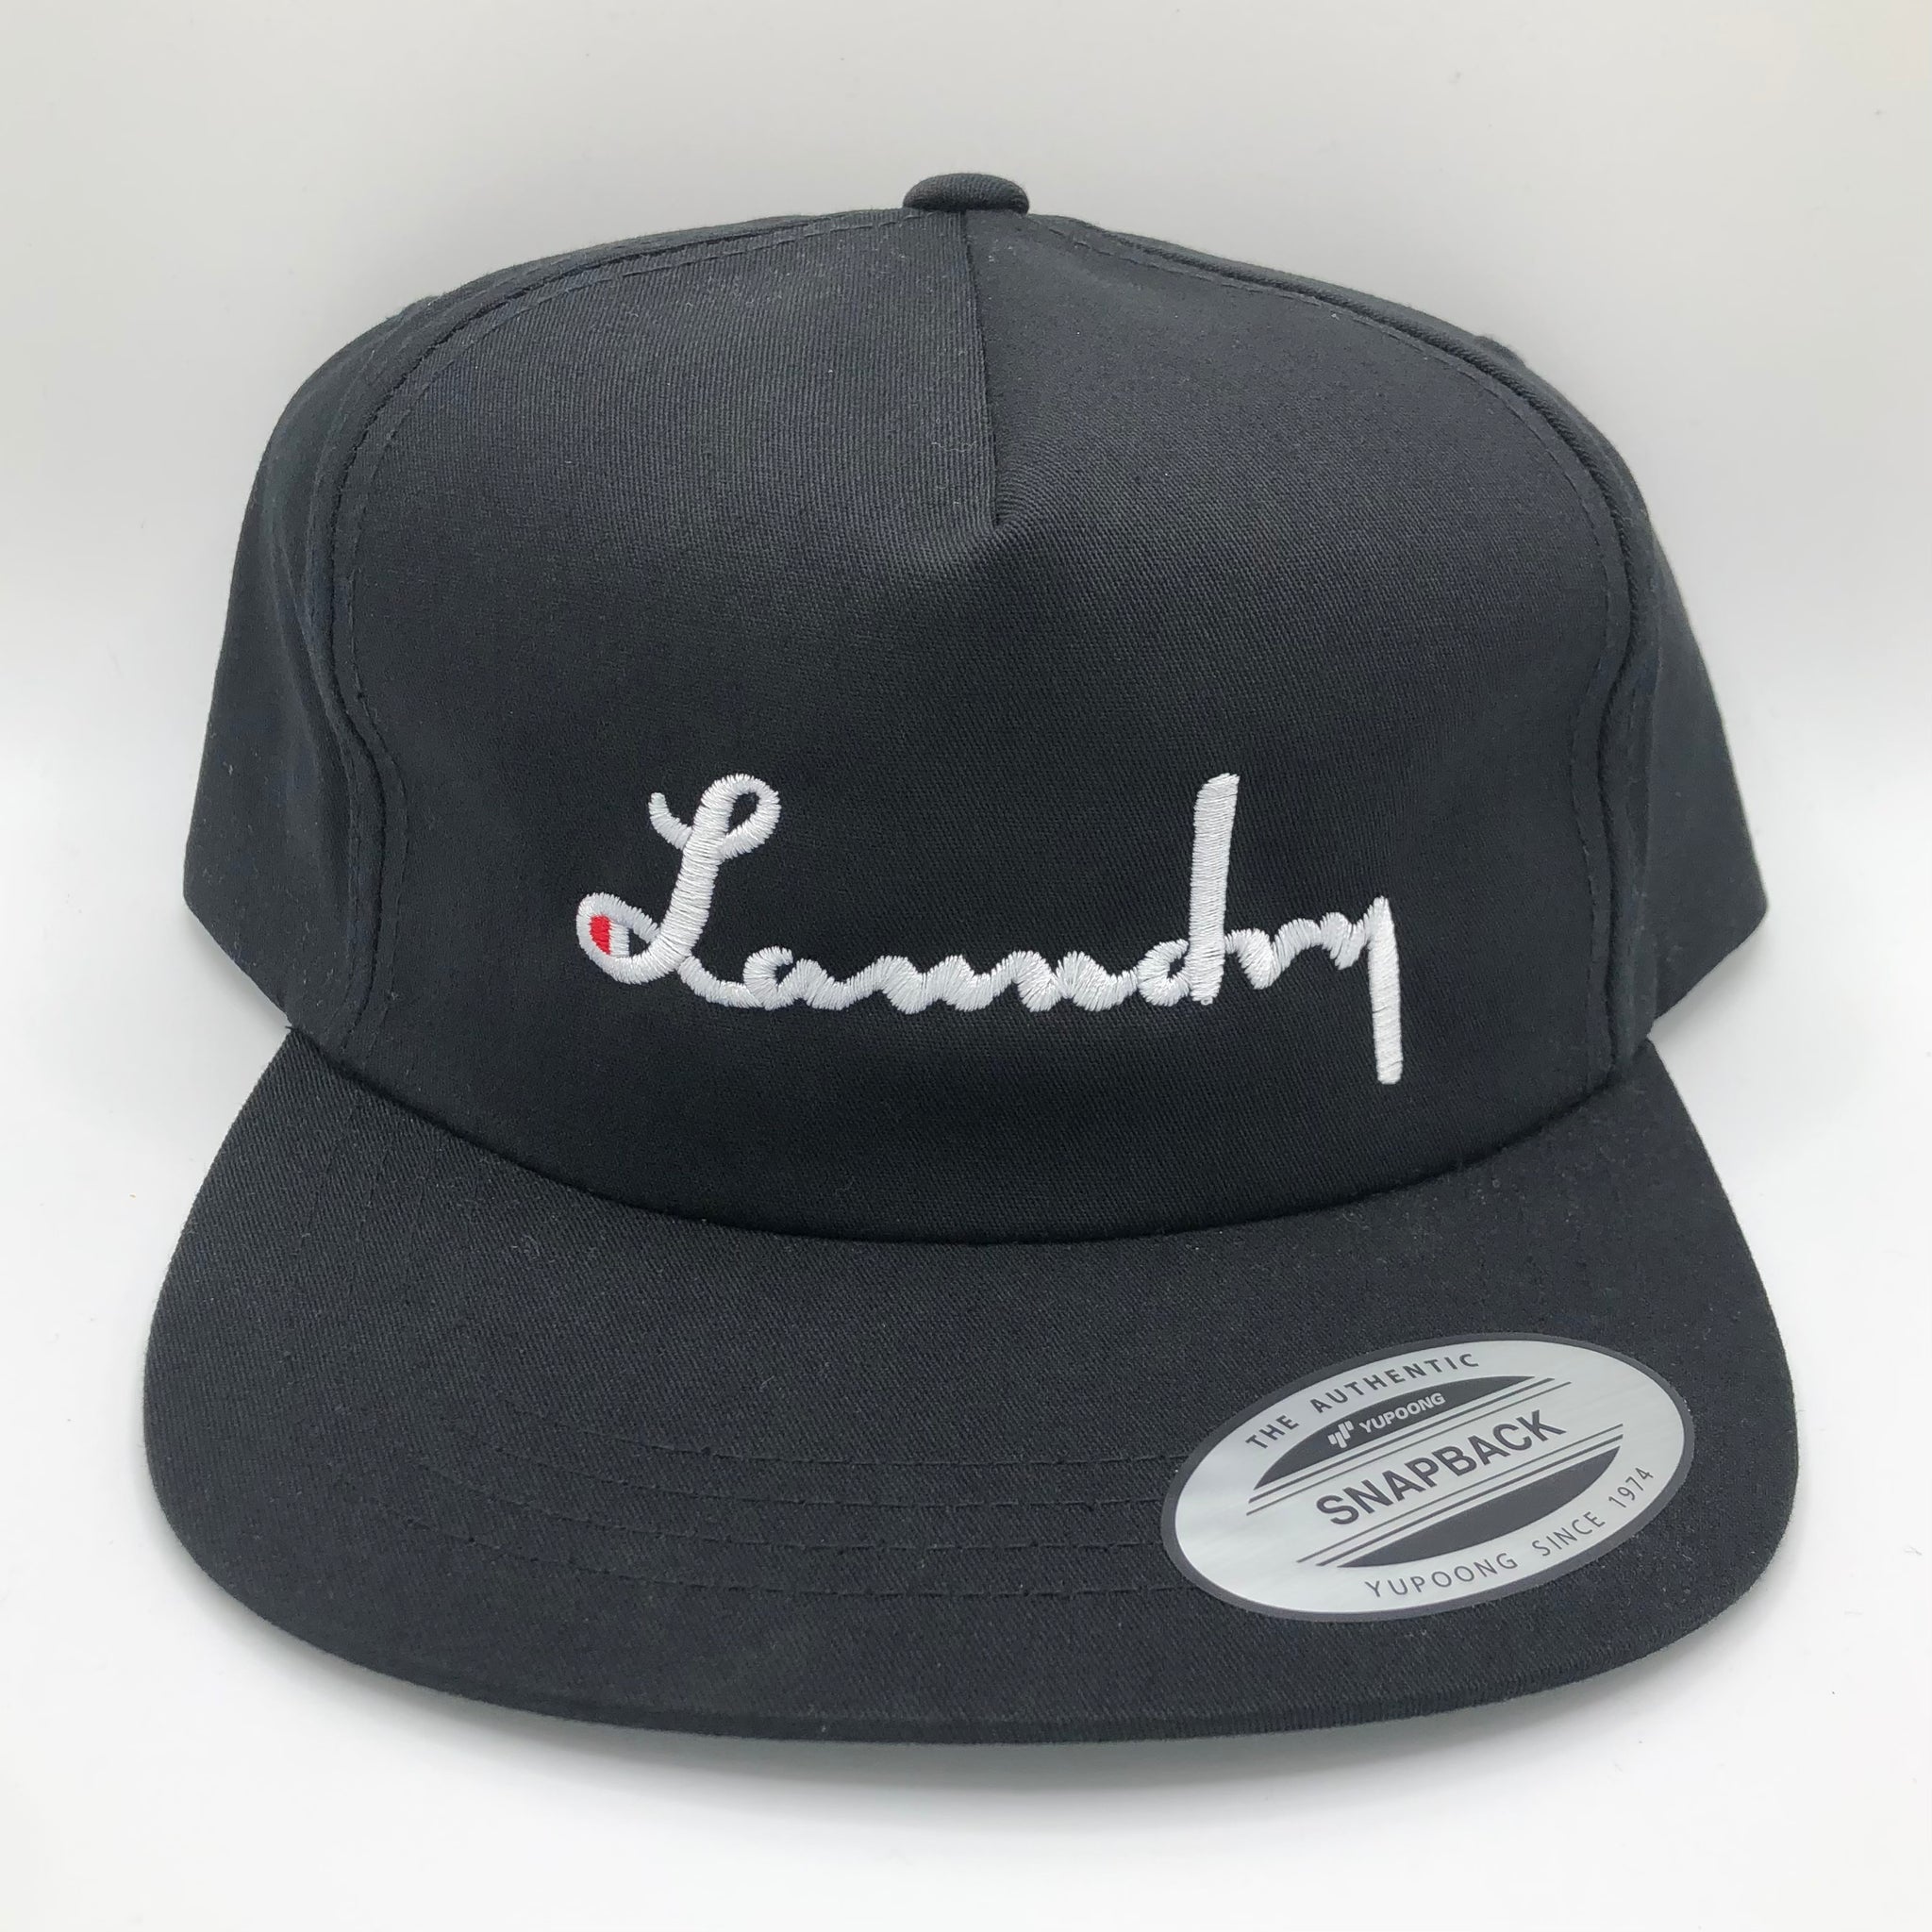 Laundry Champion Flip Snapback Hat